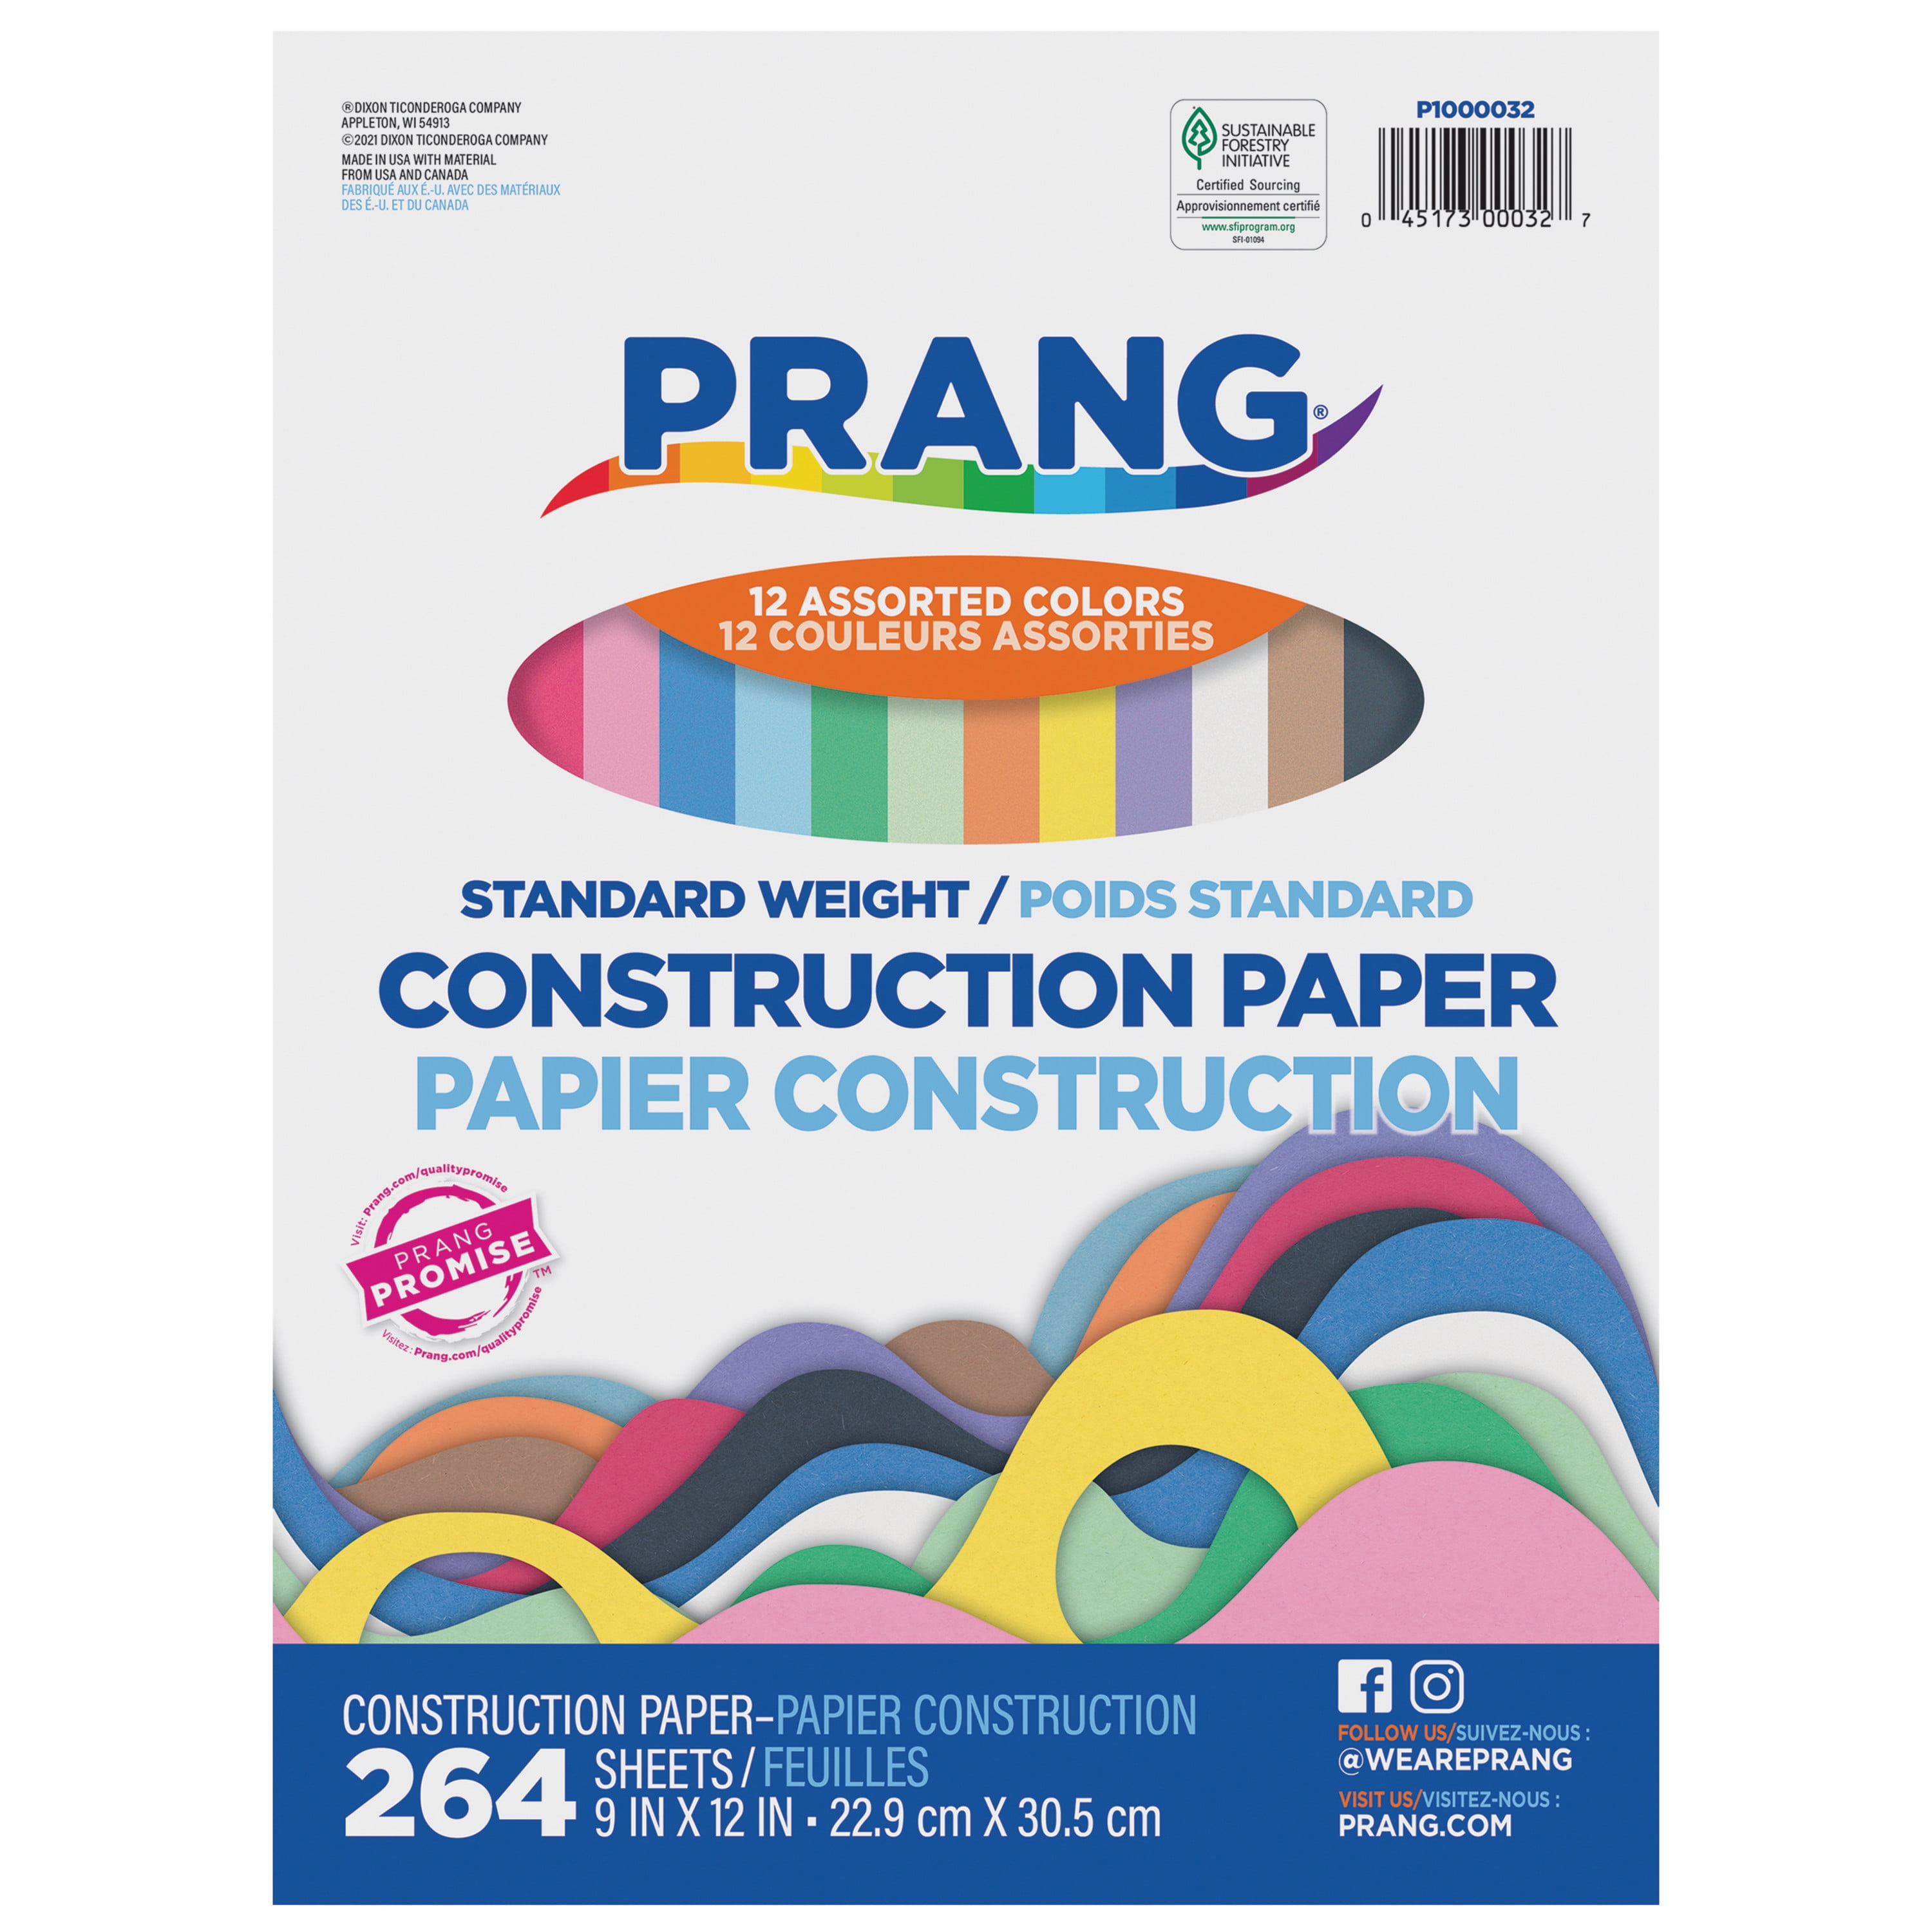 Construction Paper Bulk Assortment, 10 Assorted Colors, 12 x 18, 250  Sheets - PAC6589, Dixon Ticonderoga Co - Pacon